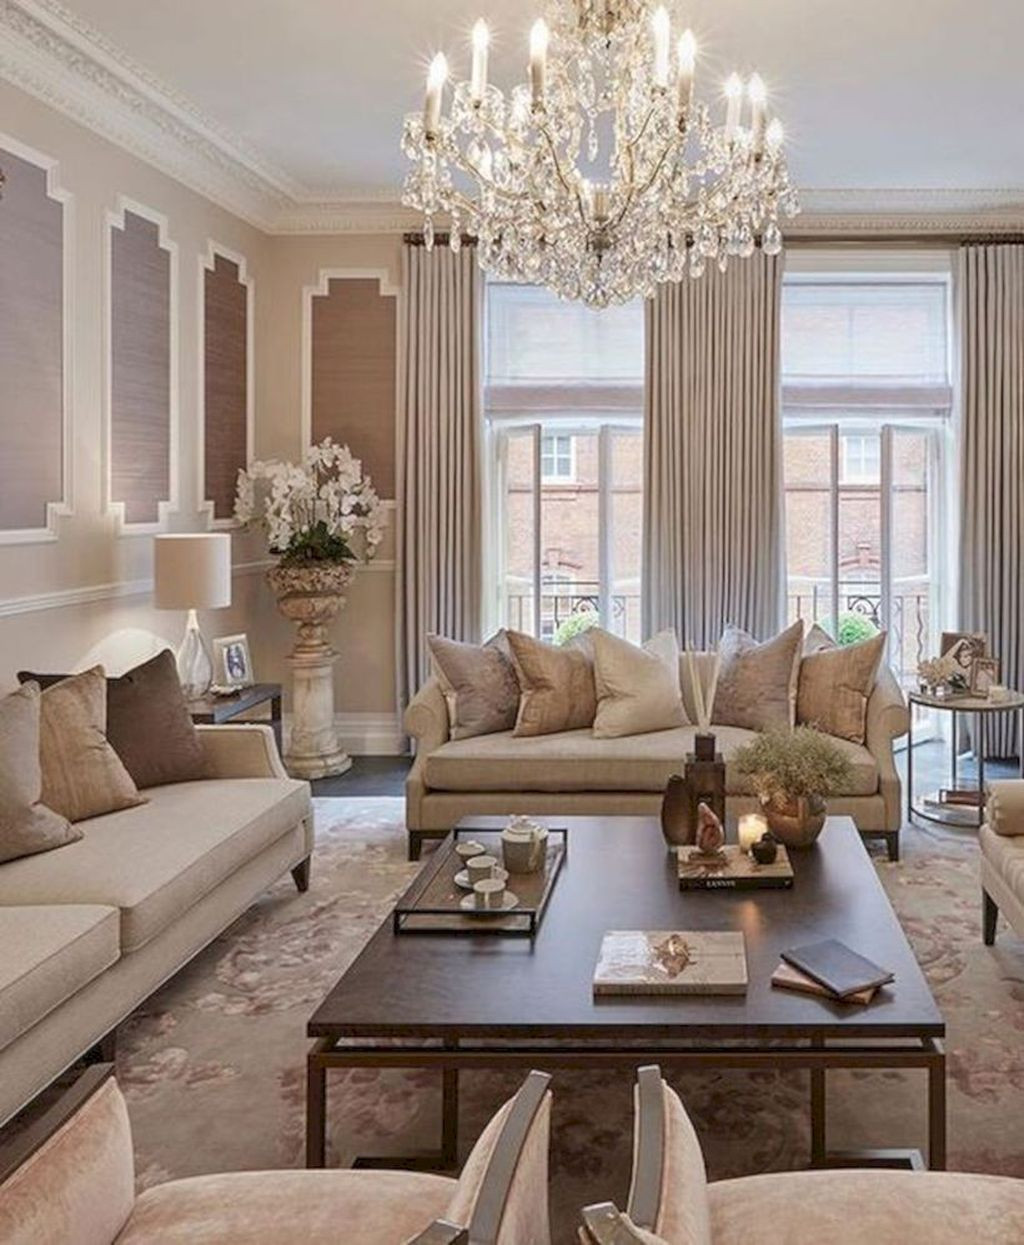 Classy Living Room Ideas
 40 Luxurious And Elegant Living Room Design Ideas HOMISHOME